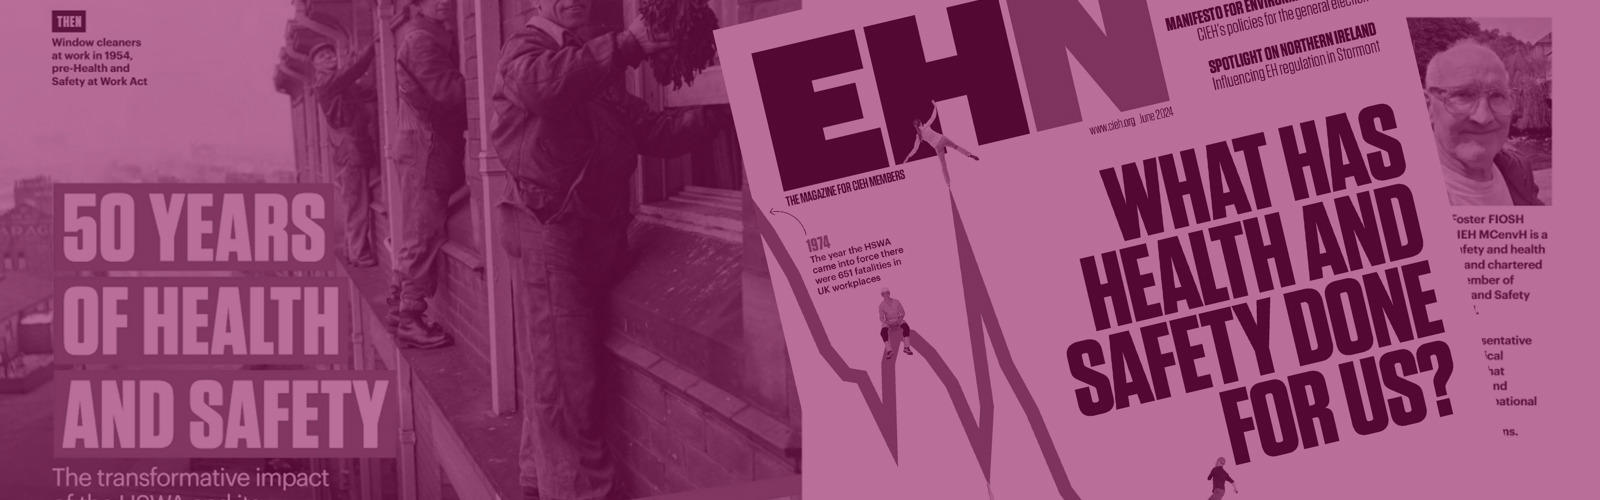 Cover of EHN magazine